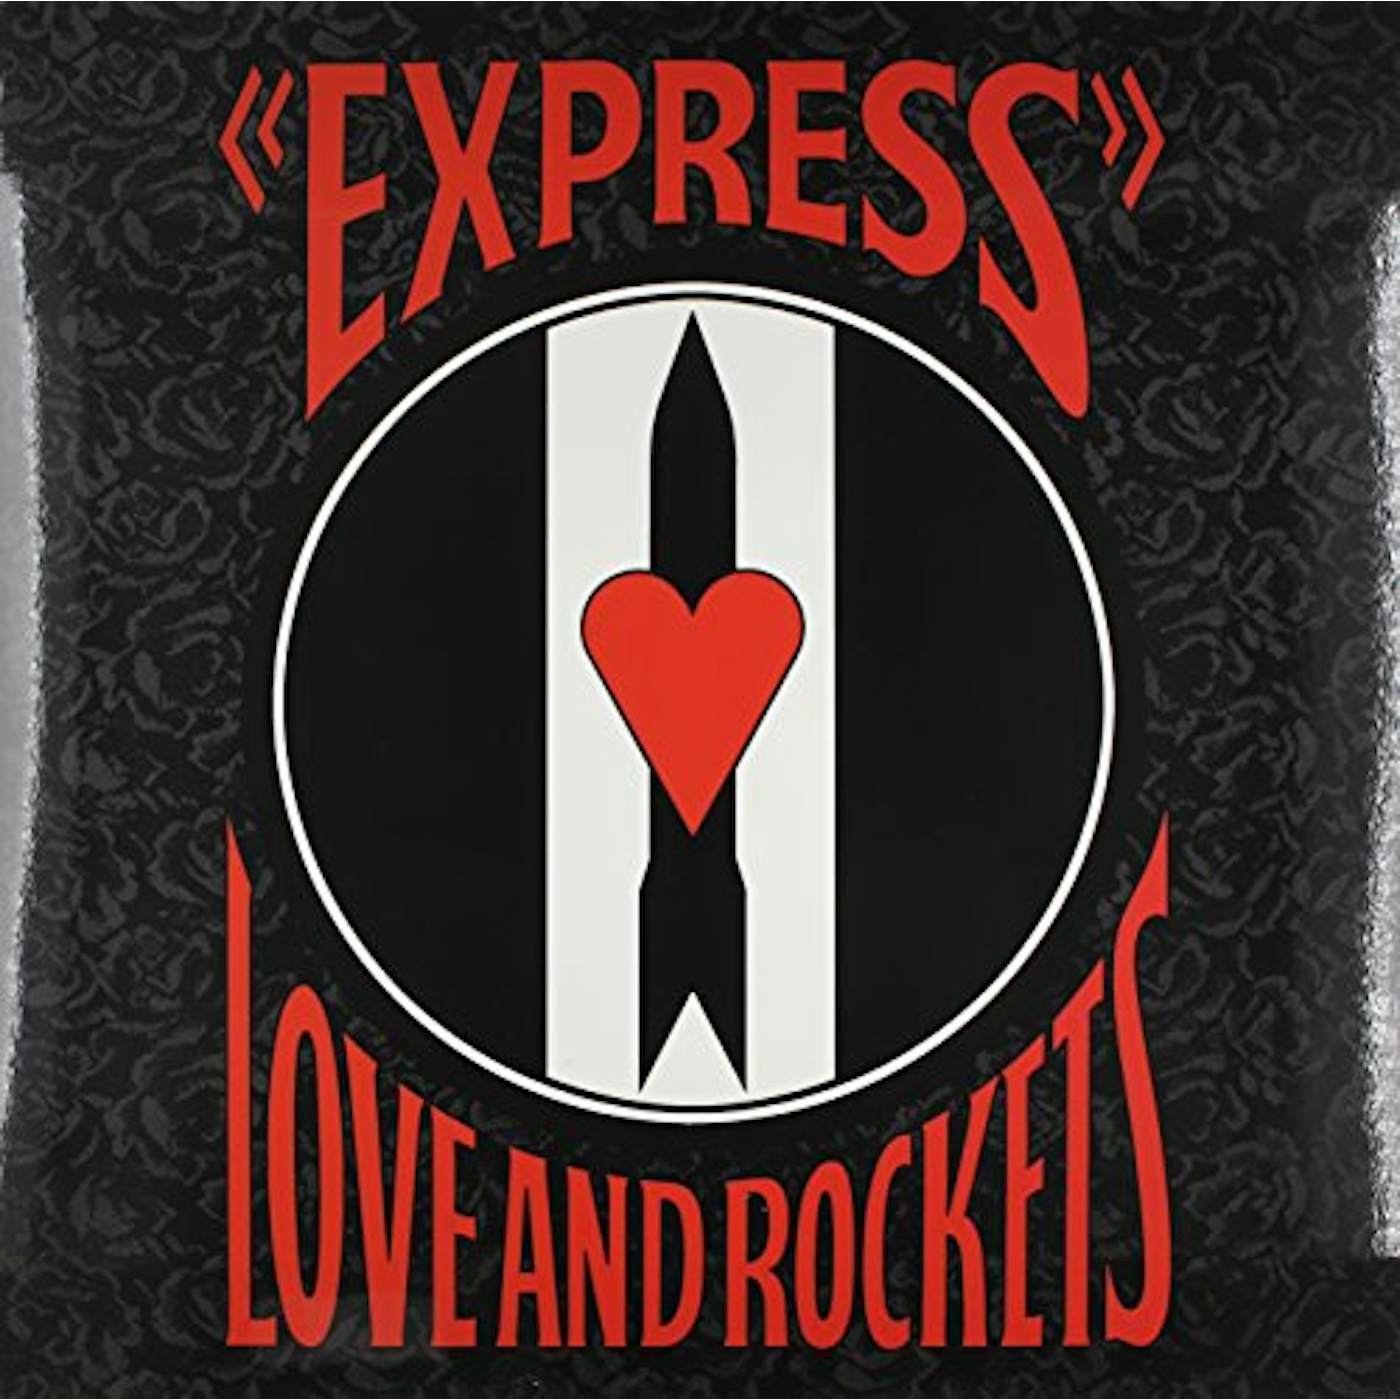 Love and Rockets Express Vinyl Record